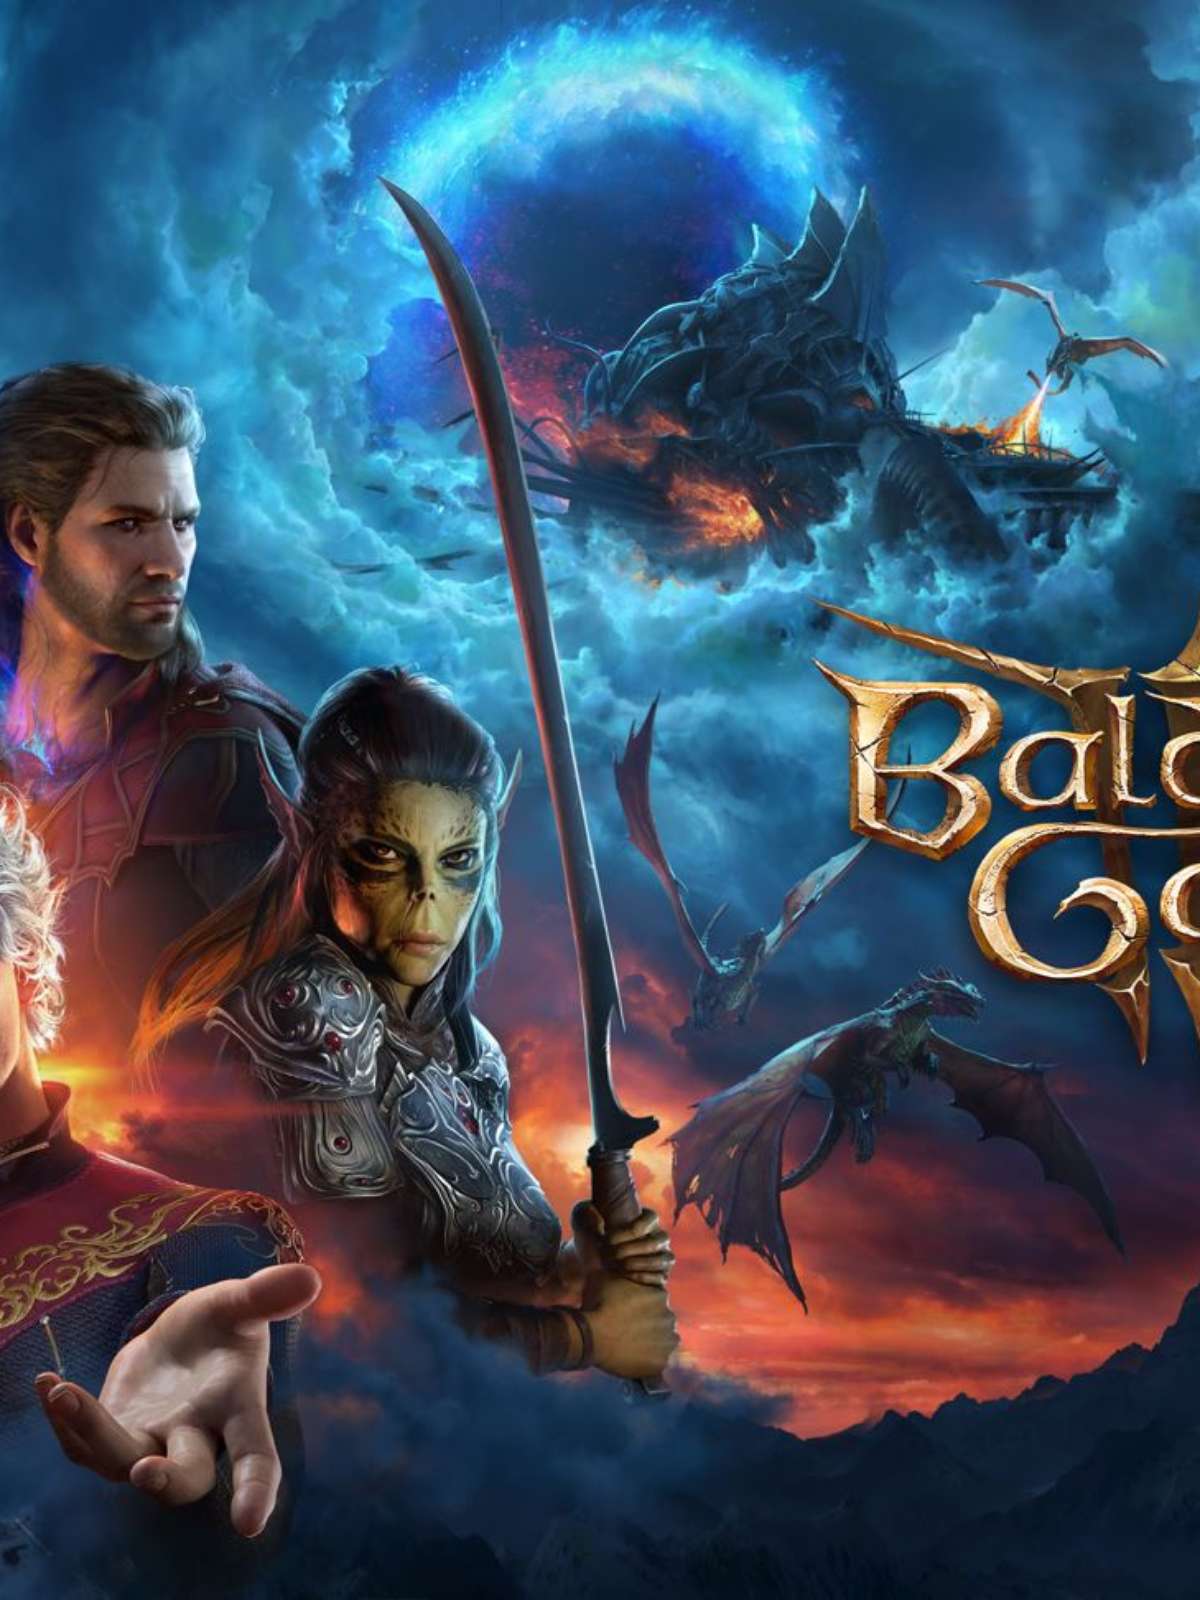 Saiba tudo sobre Baldur's Gate III, novo game de D&D